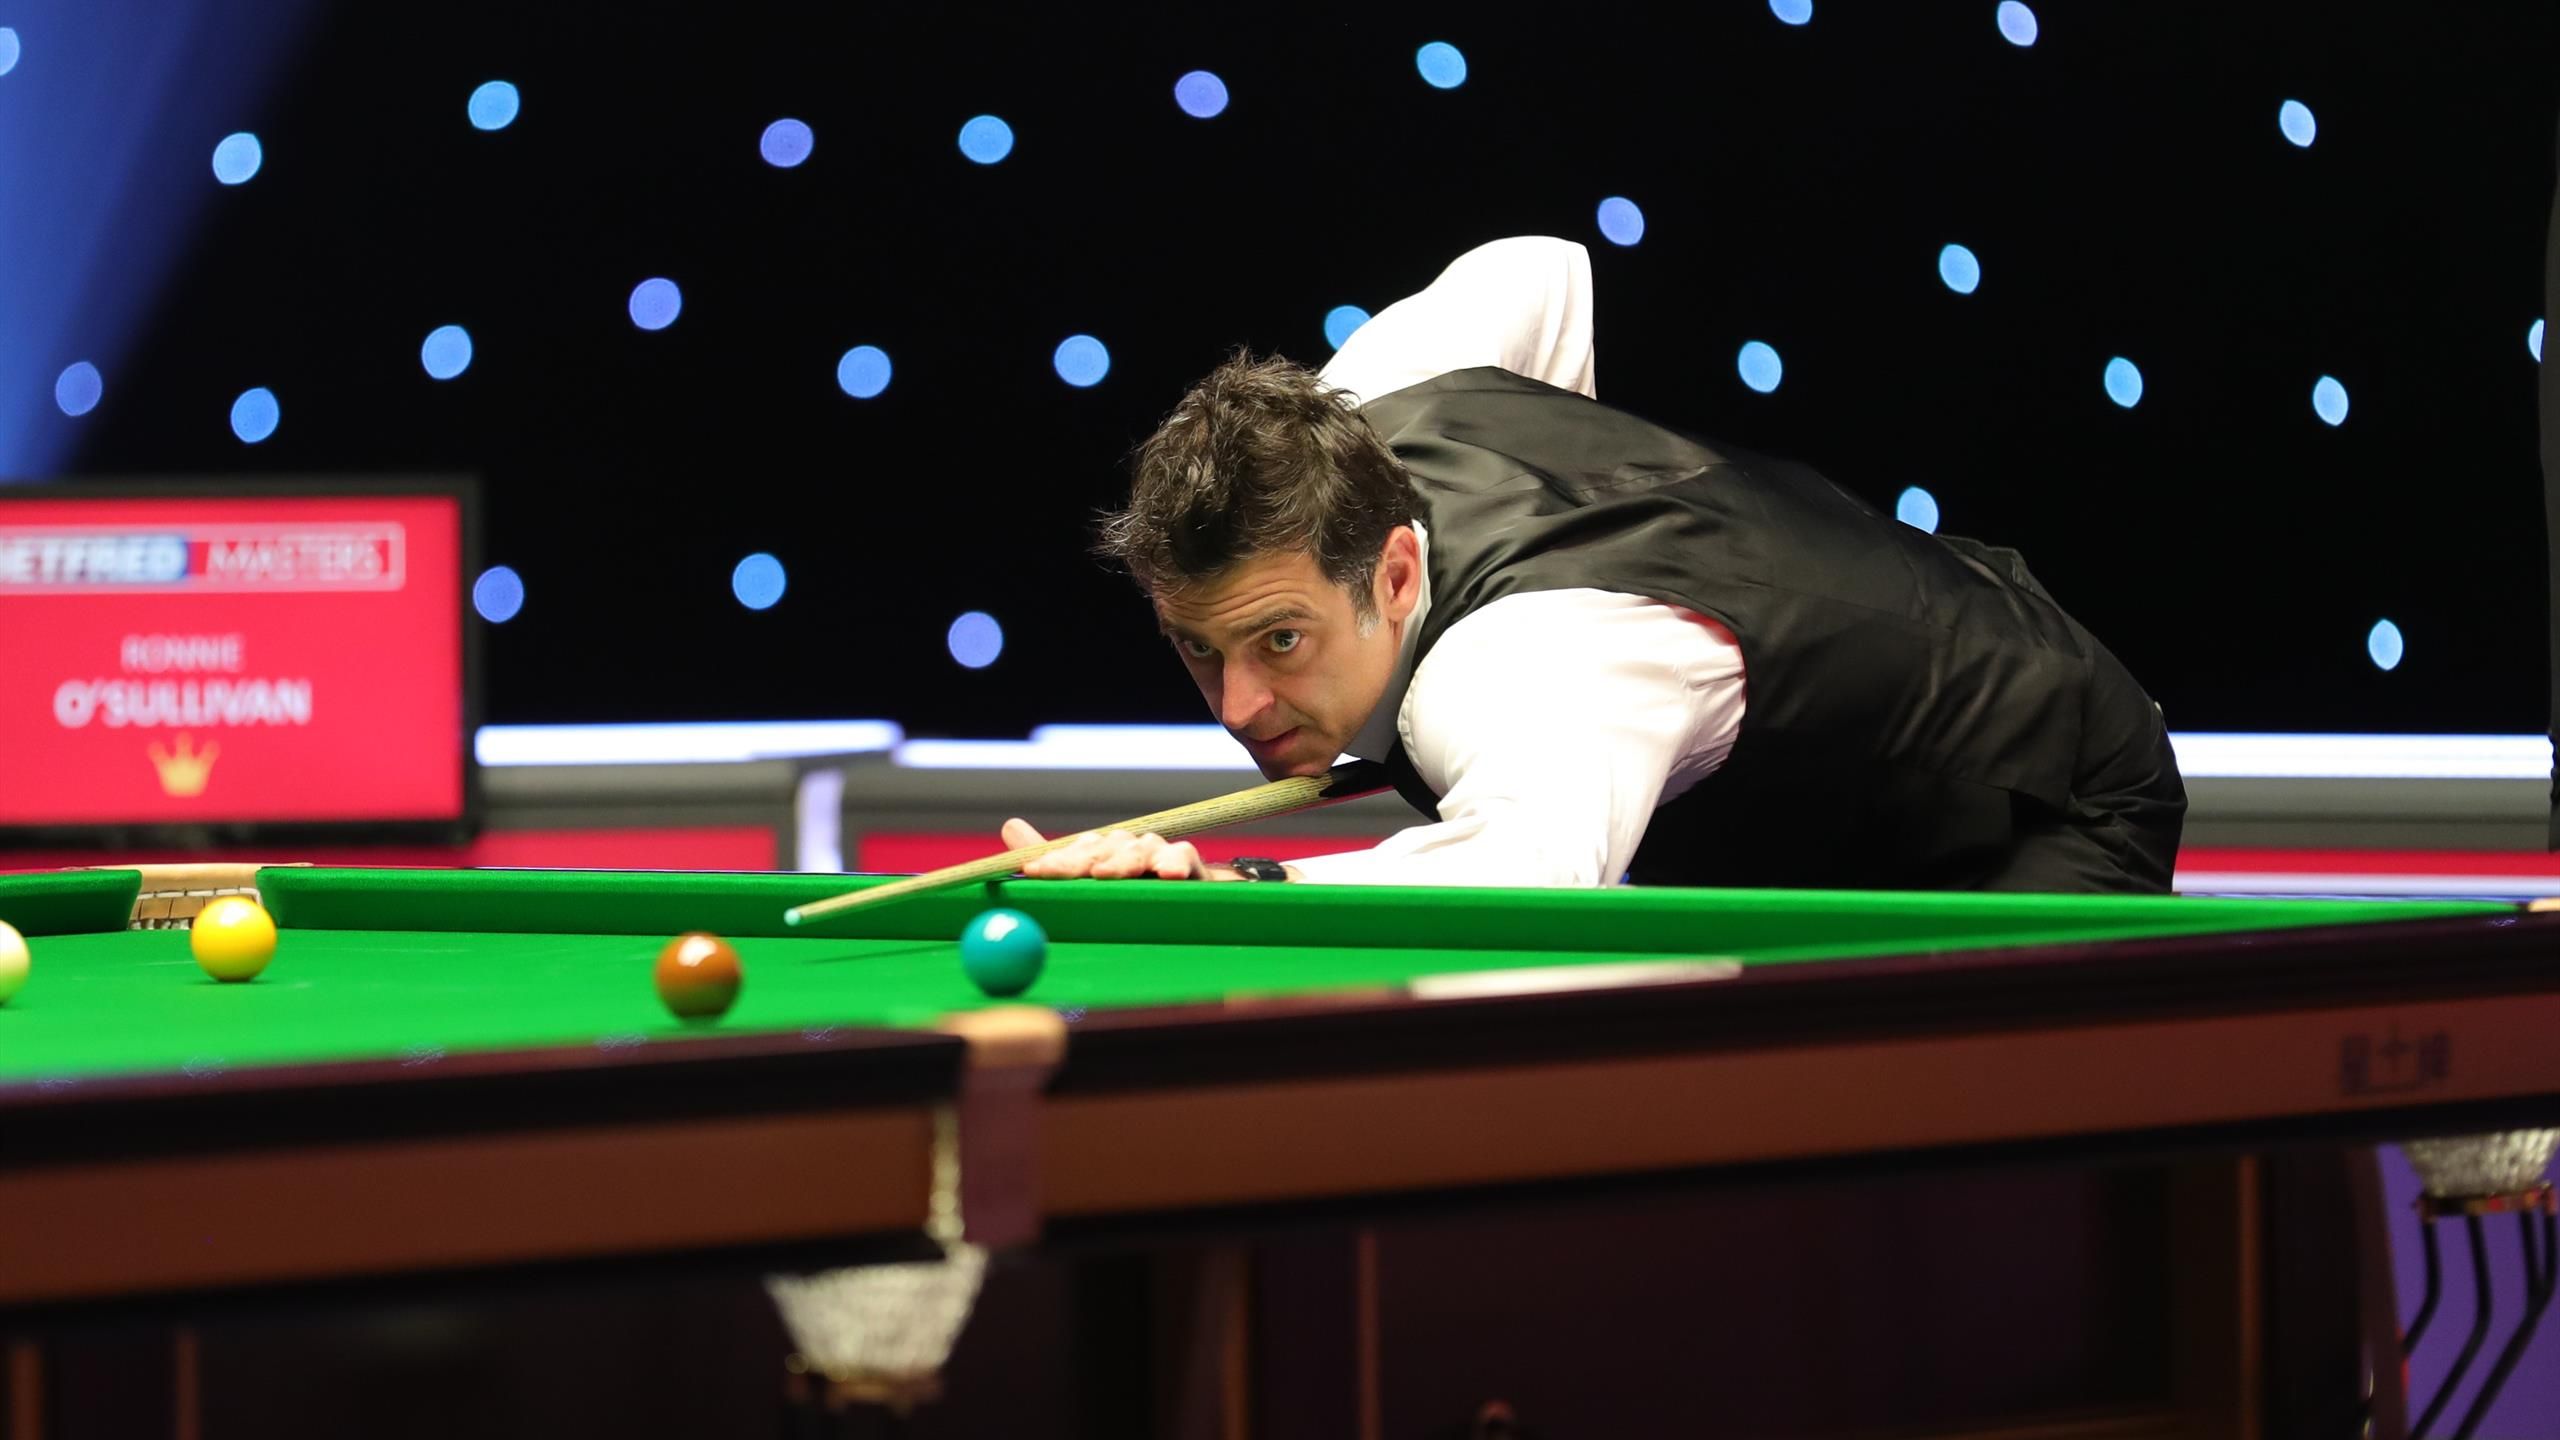 Championship League Snooker: Ronnie O'Sullivan Quits Event After Semi Final Defeat